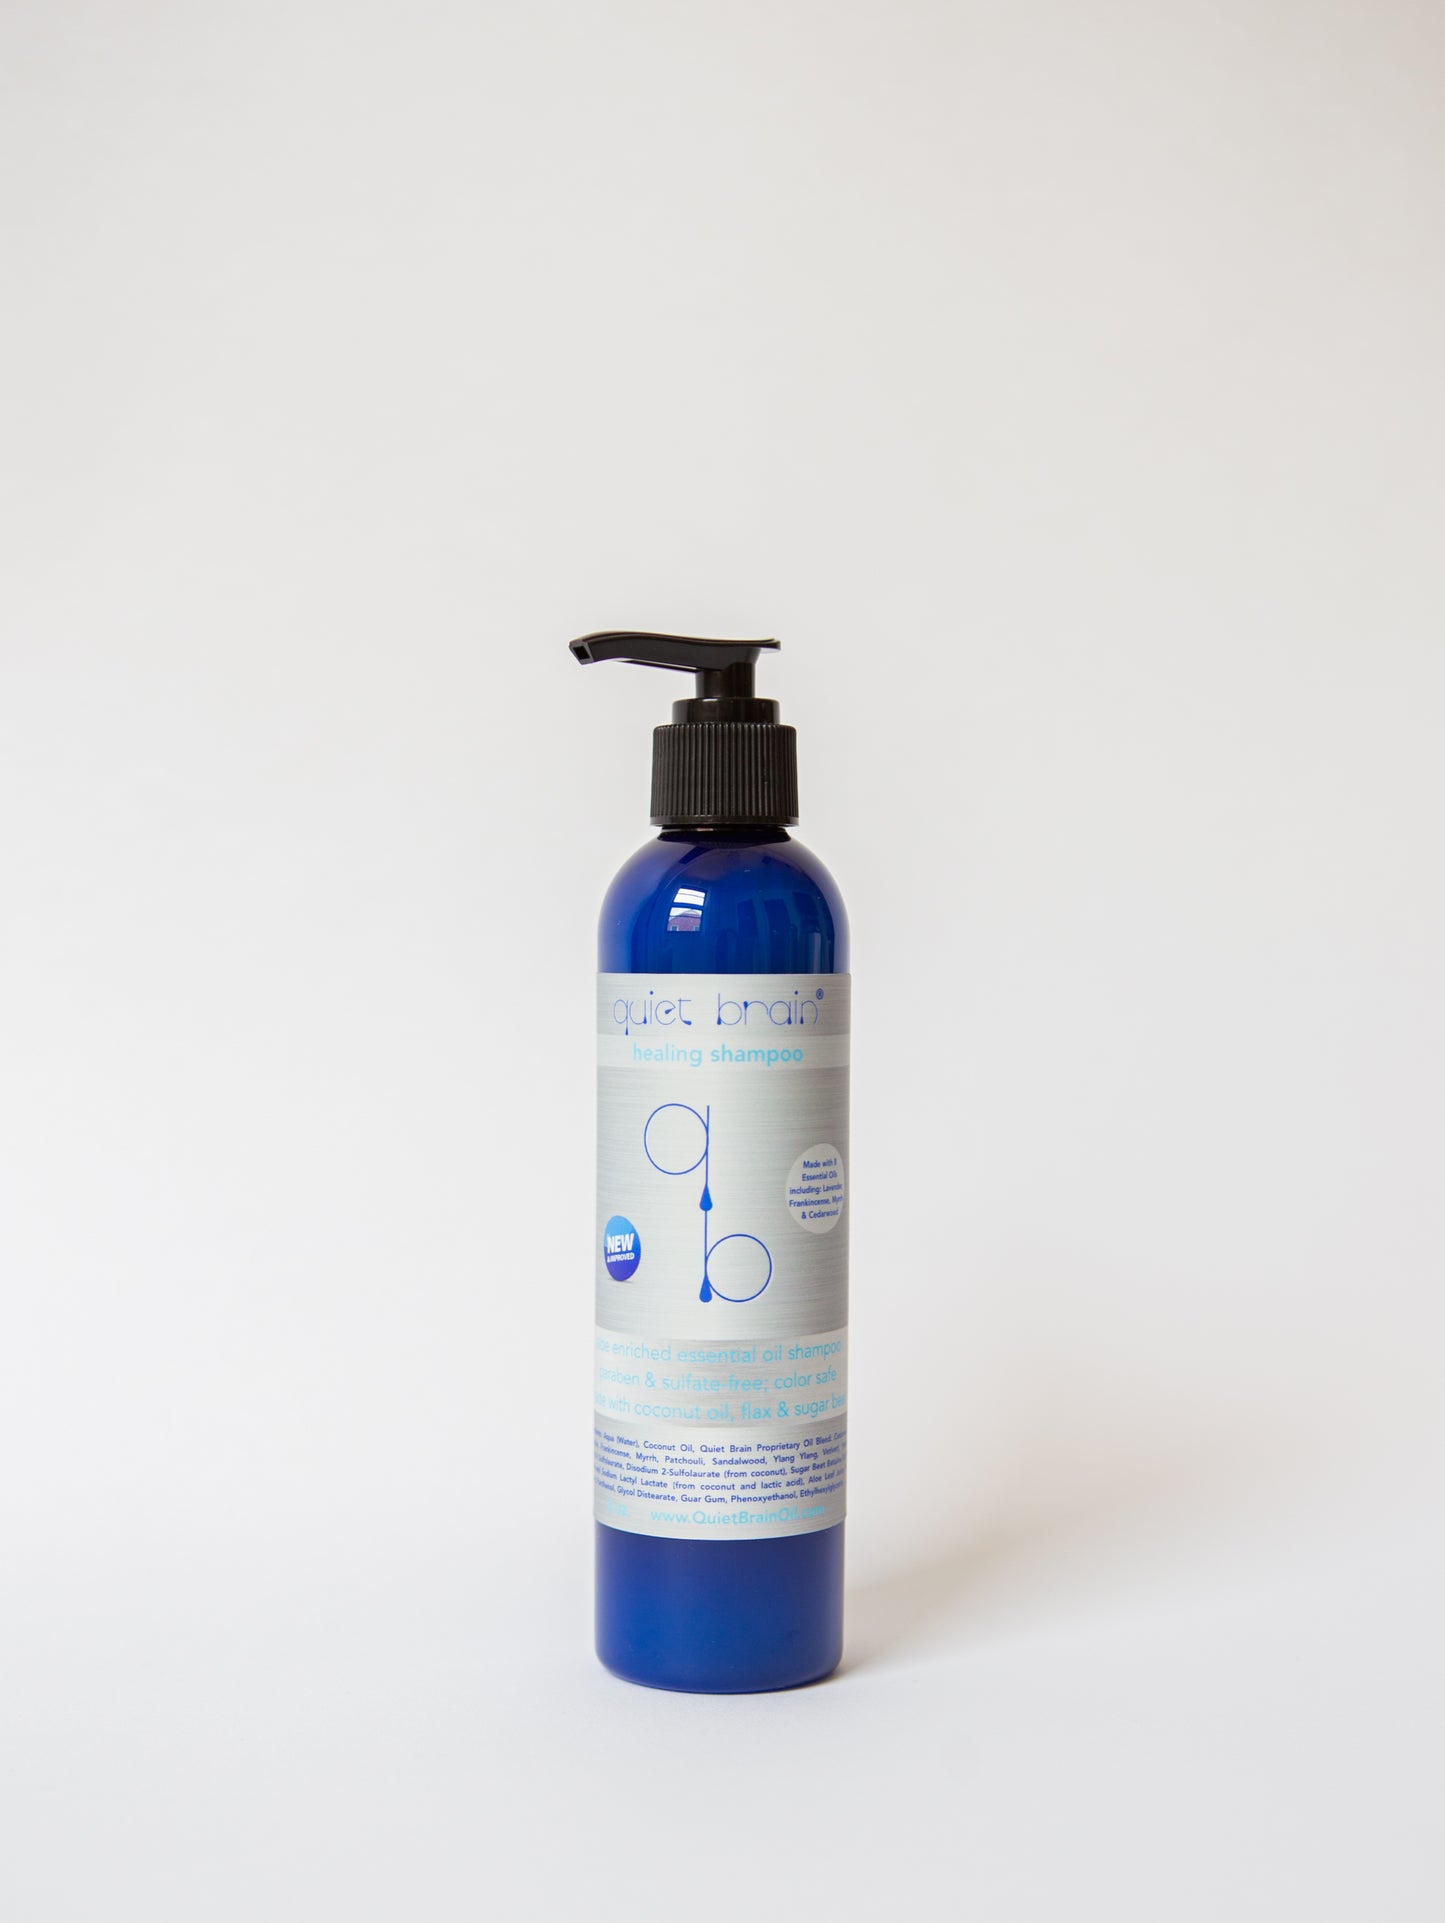 Quiet Brain® Healing Shampoo Pump bottle (now with even more Quiet Brain!)